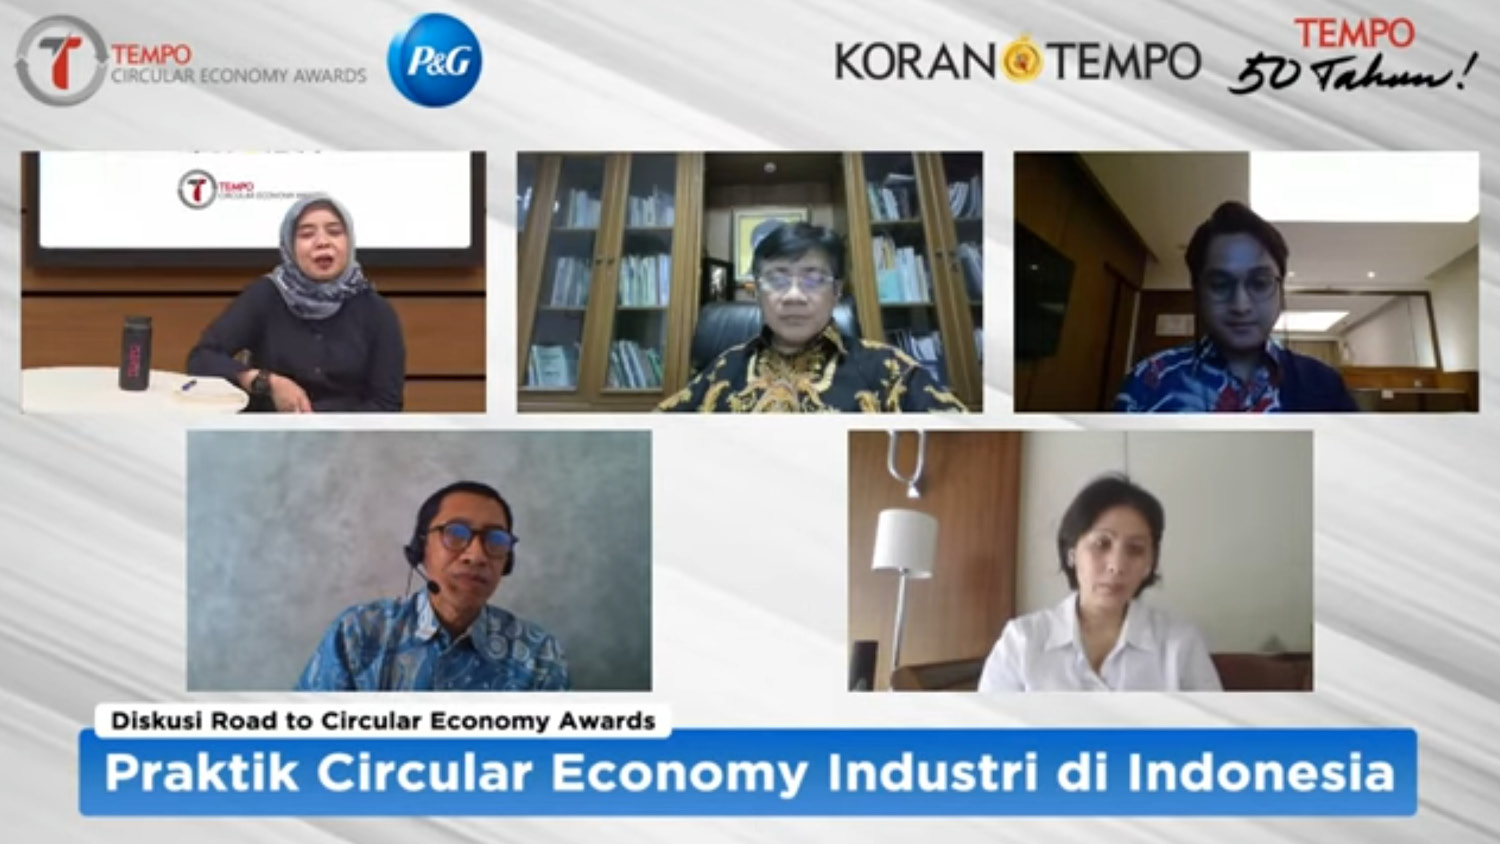 Diskusi Road to Circular Economy Awards - Praktik Circular Economy Industry di Indonesia, Jumat, 17 Desember 2021.